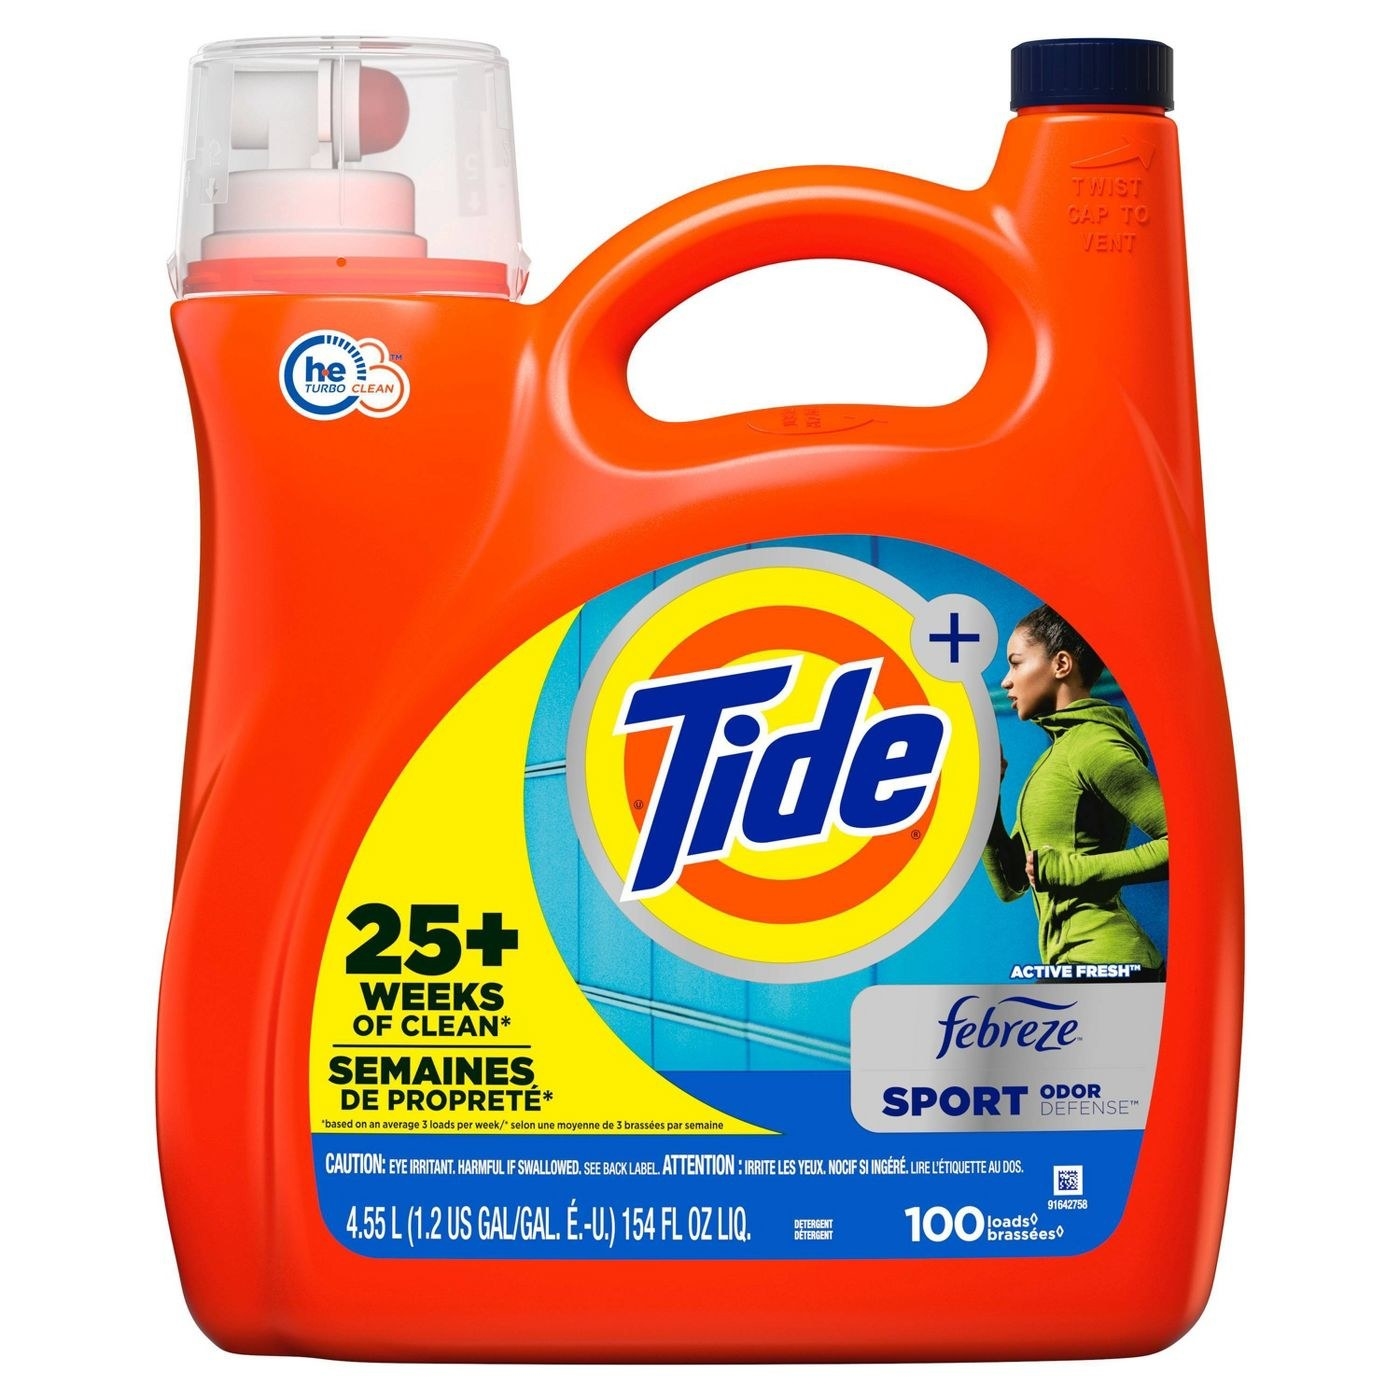 the Tide detergent